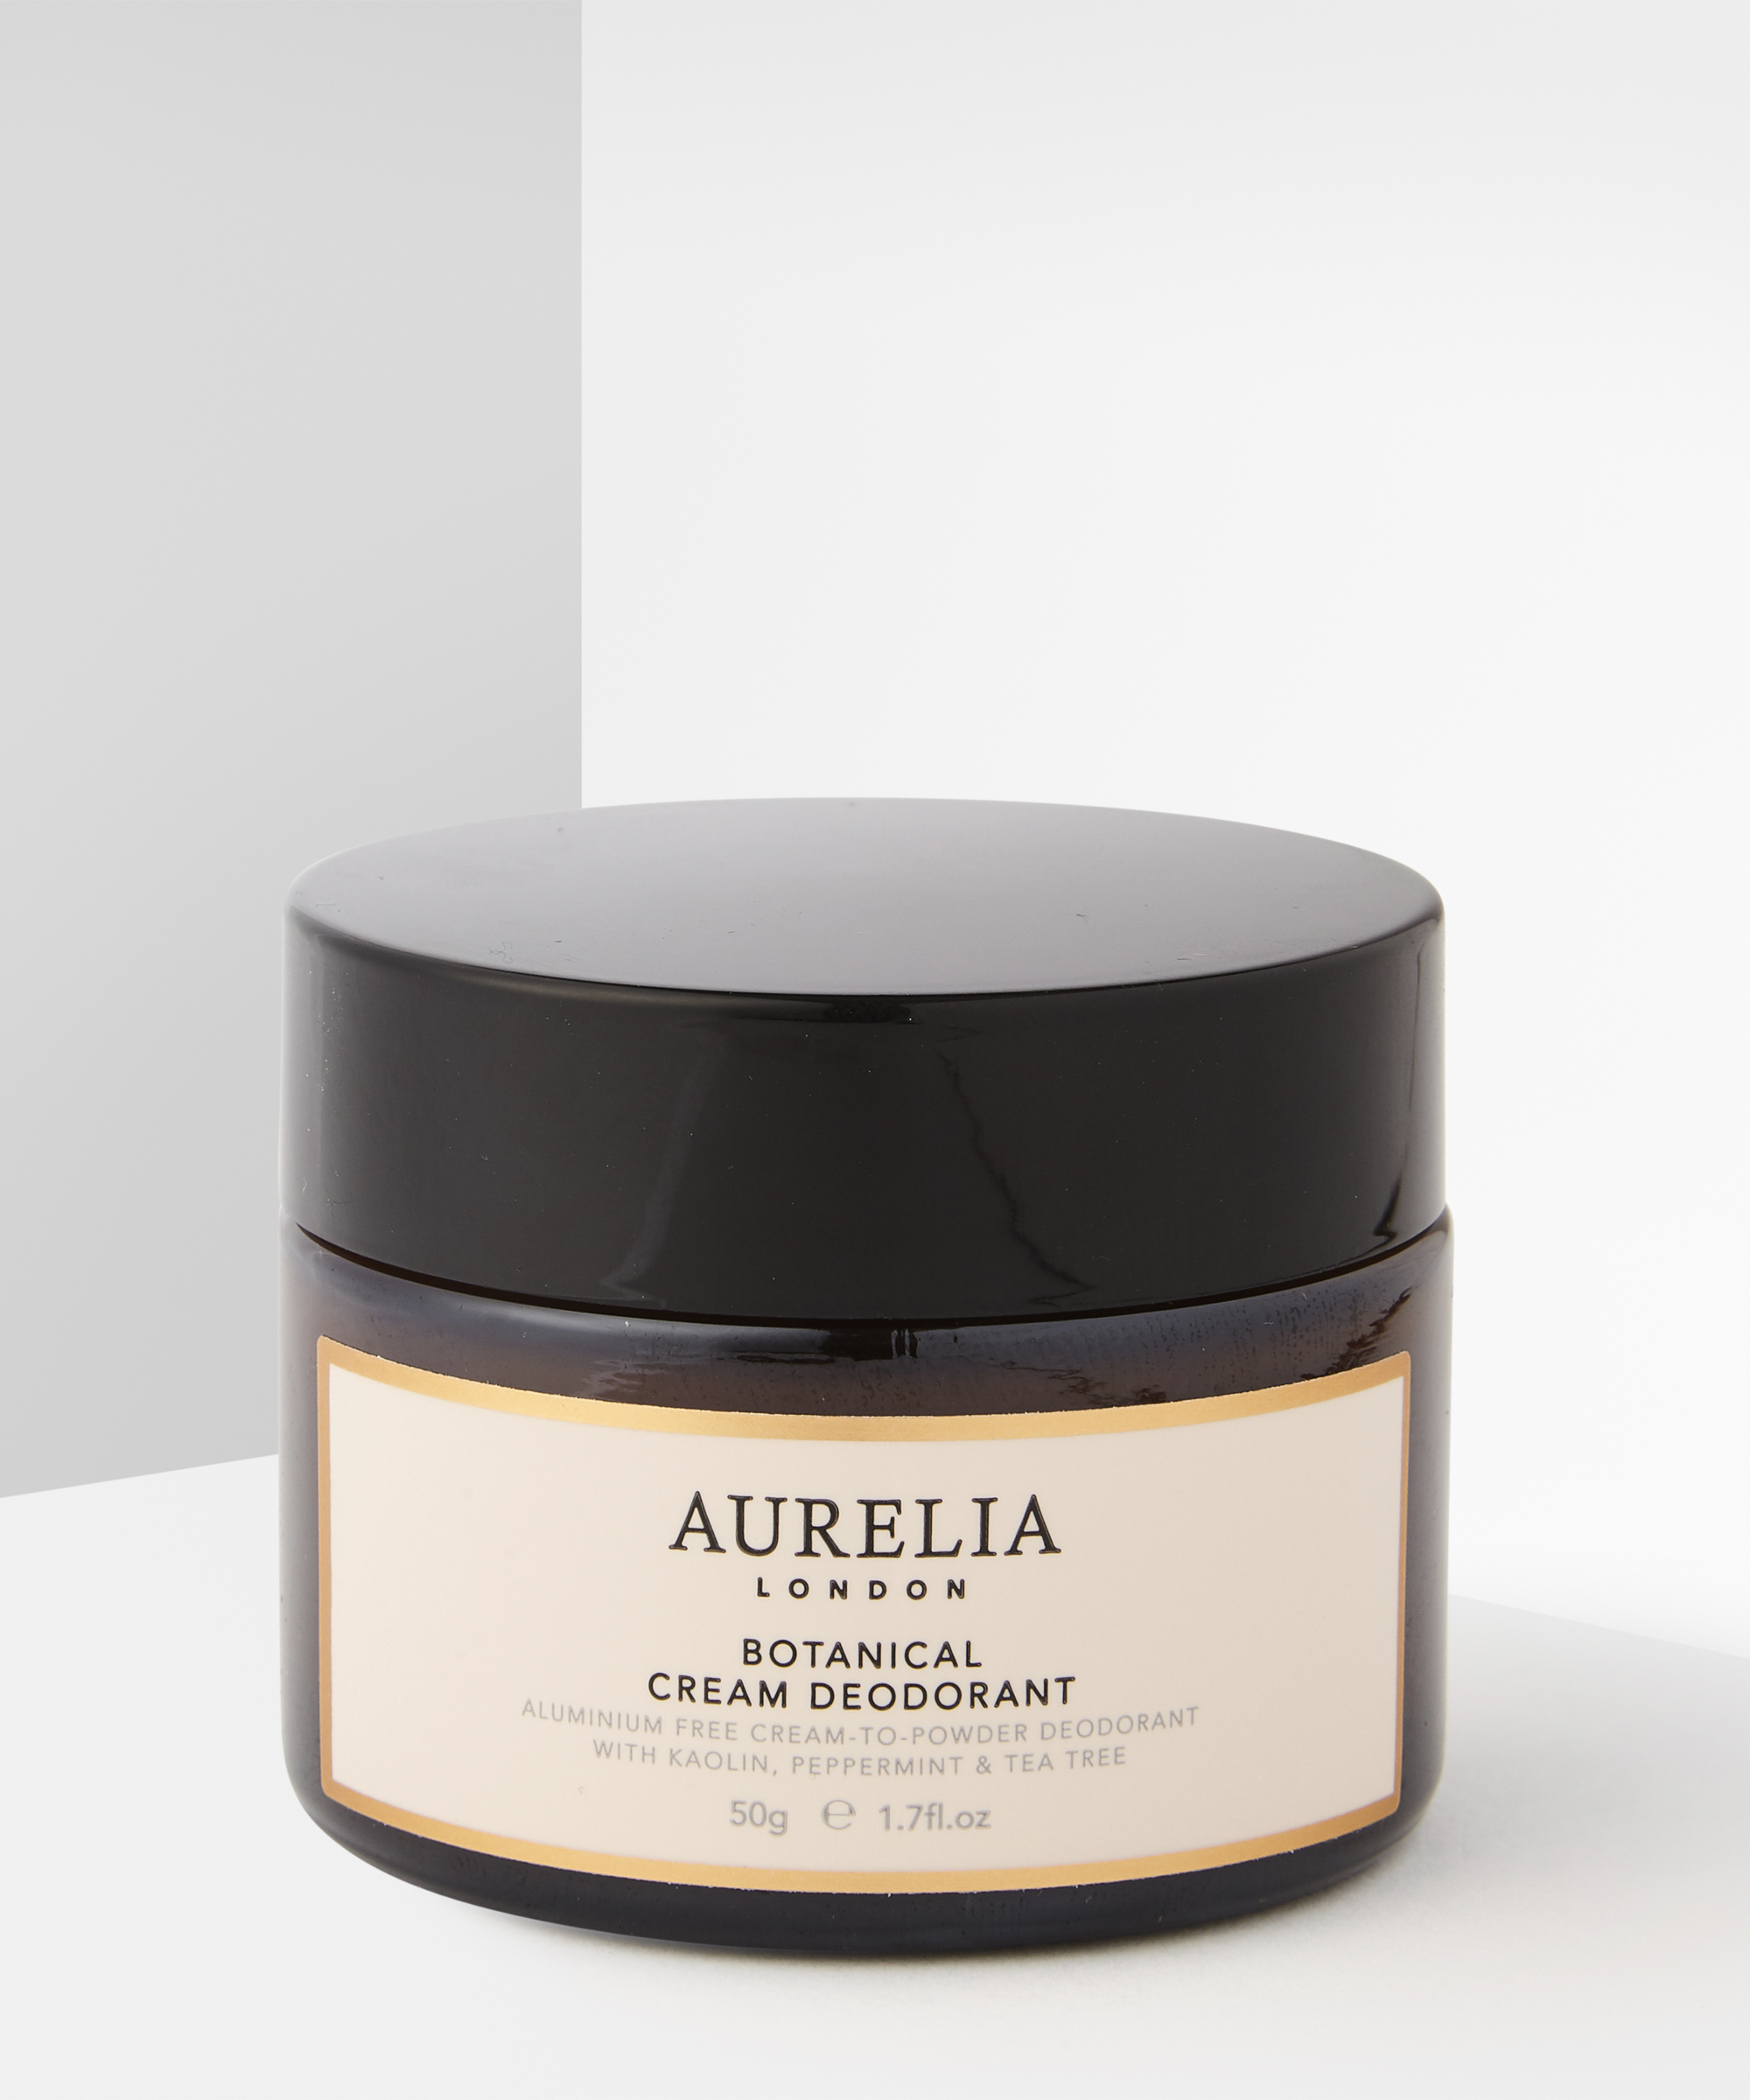 Aurelia London Botanical Cream Deodorant at BEAUTY